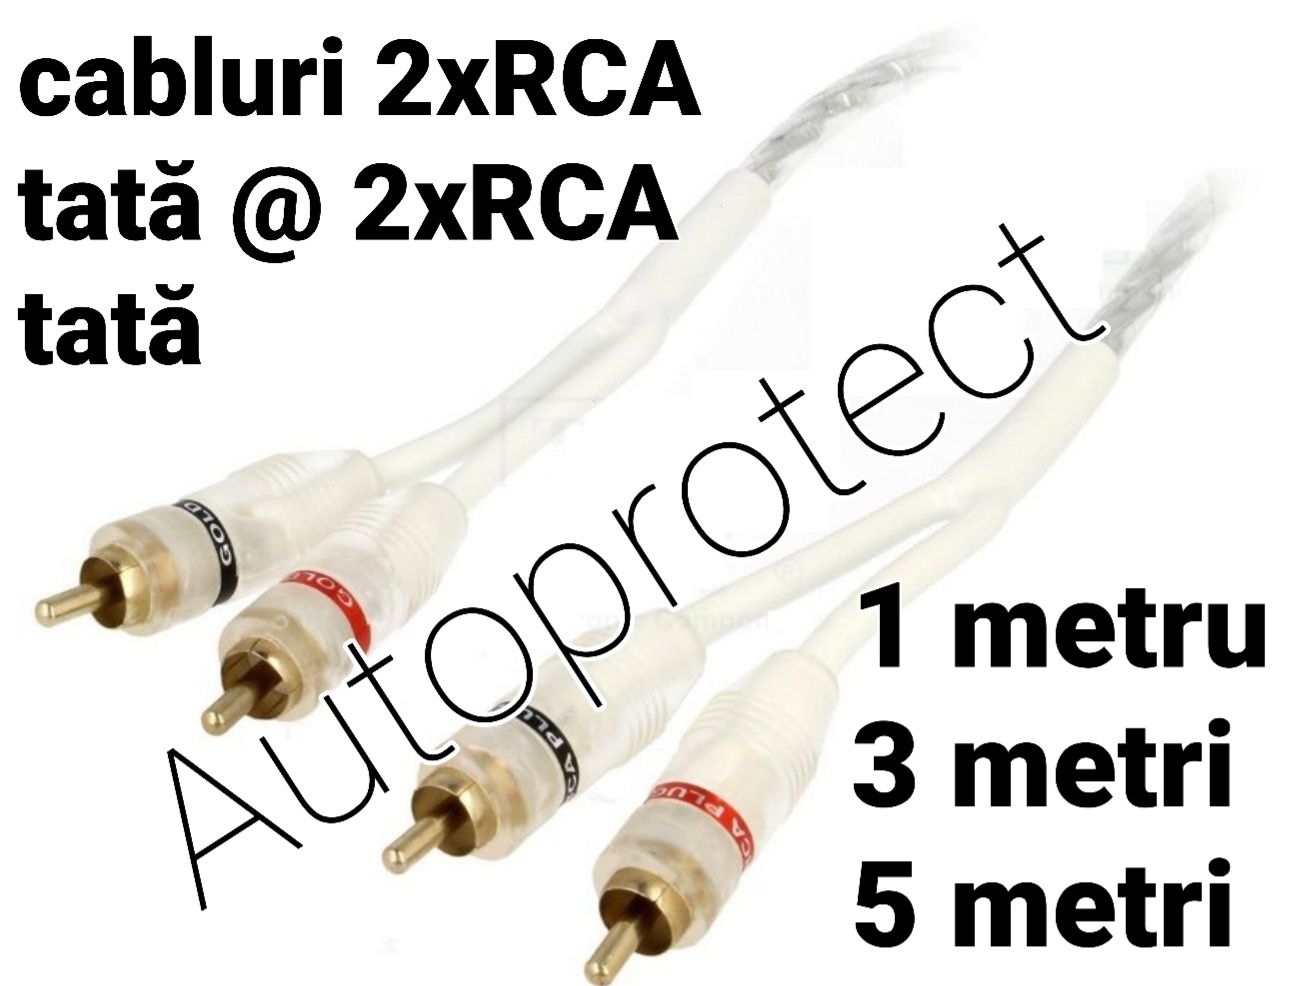 Cabluri RCA sau kit complet statie amplificator subwoofer casa masina